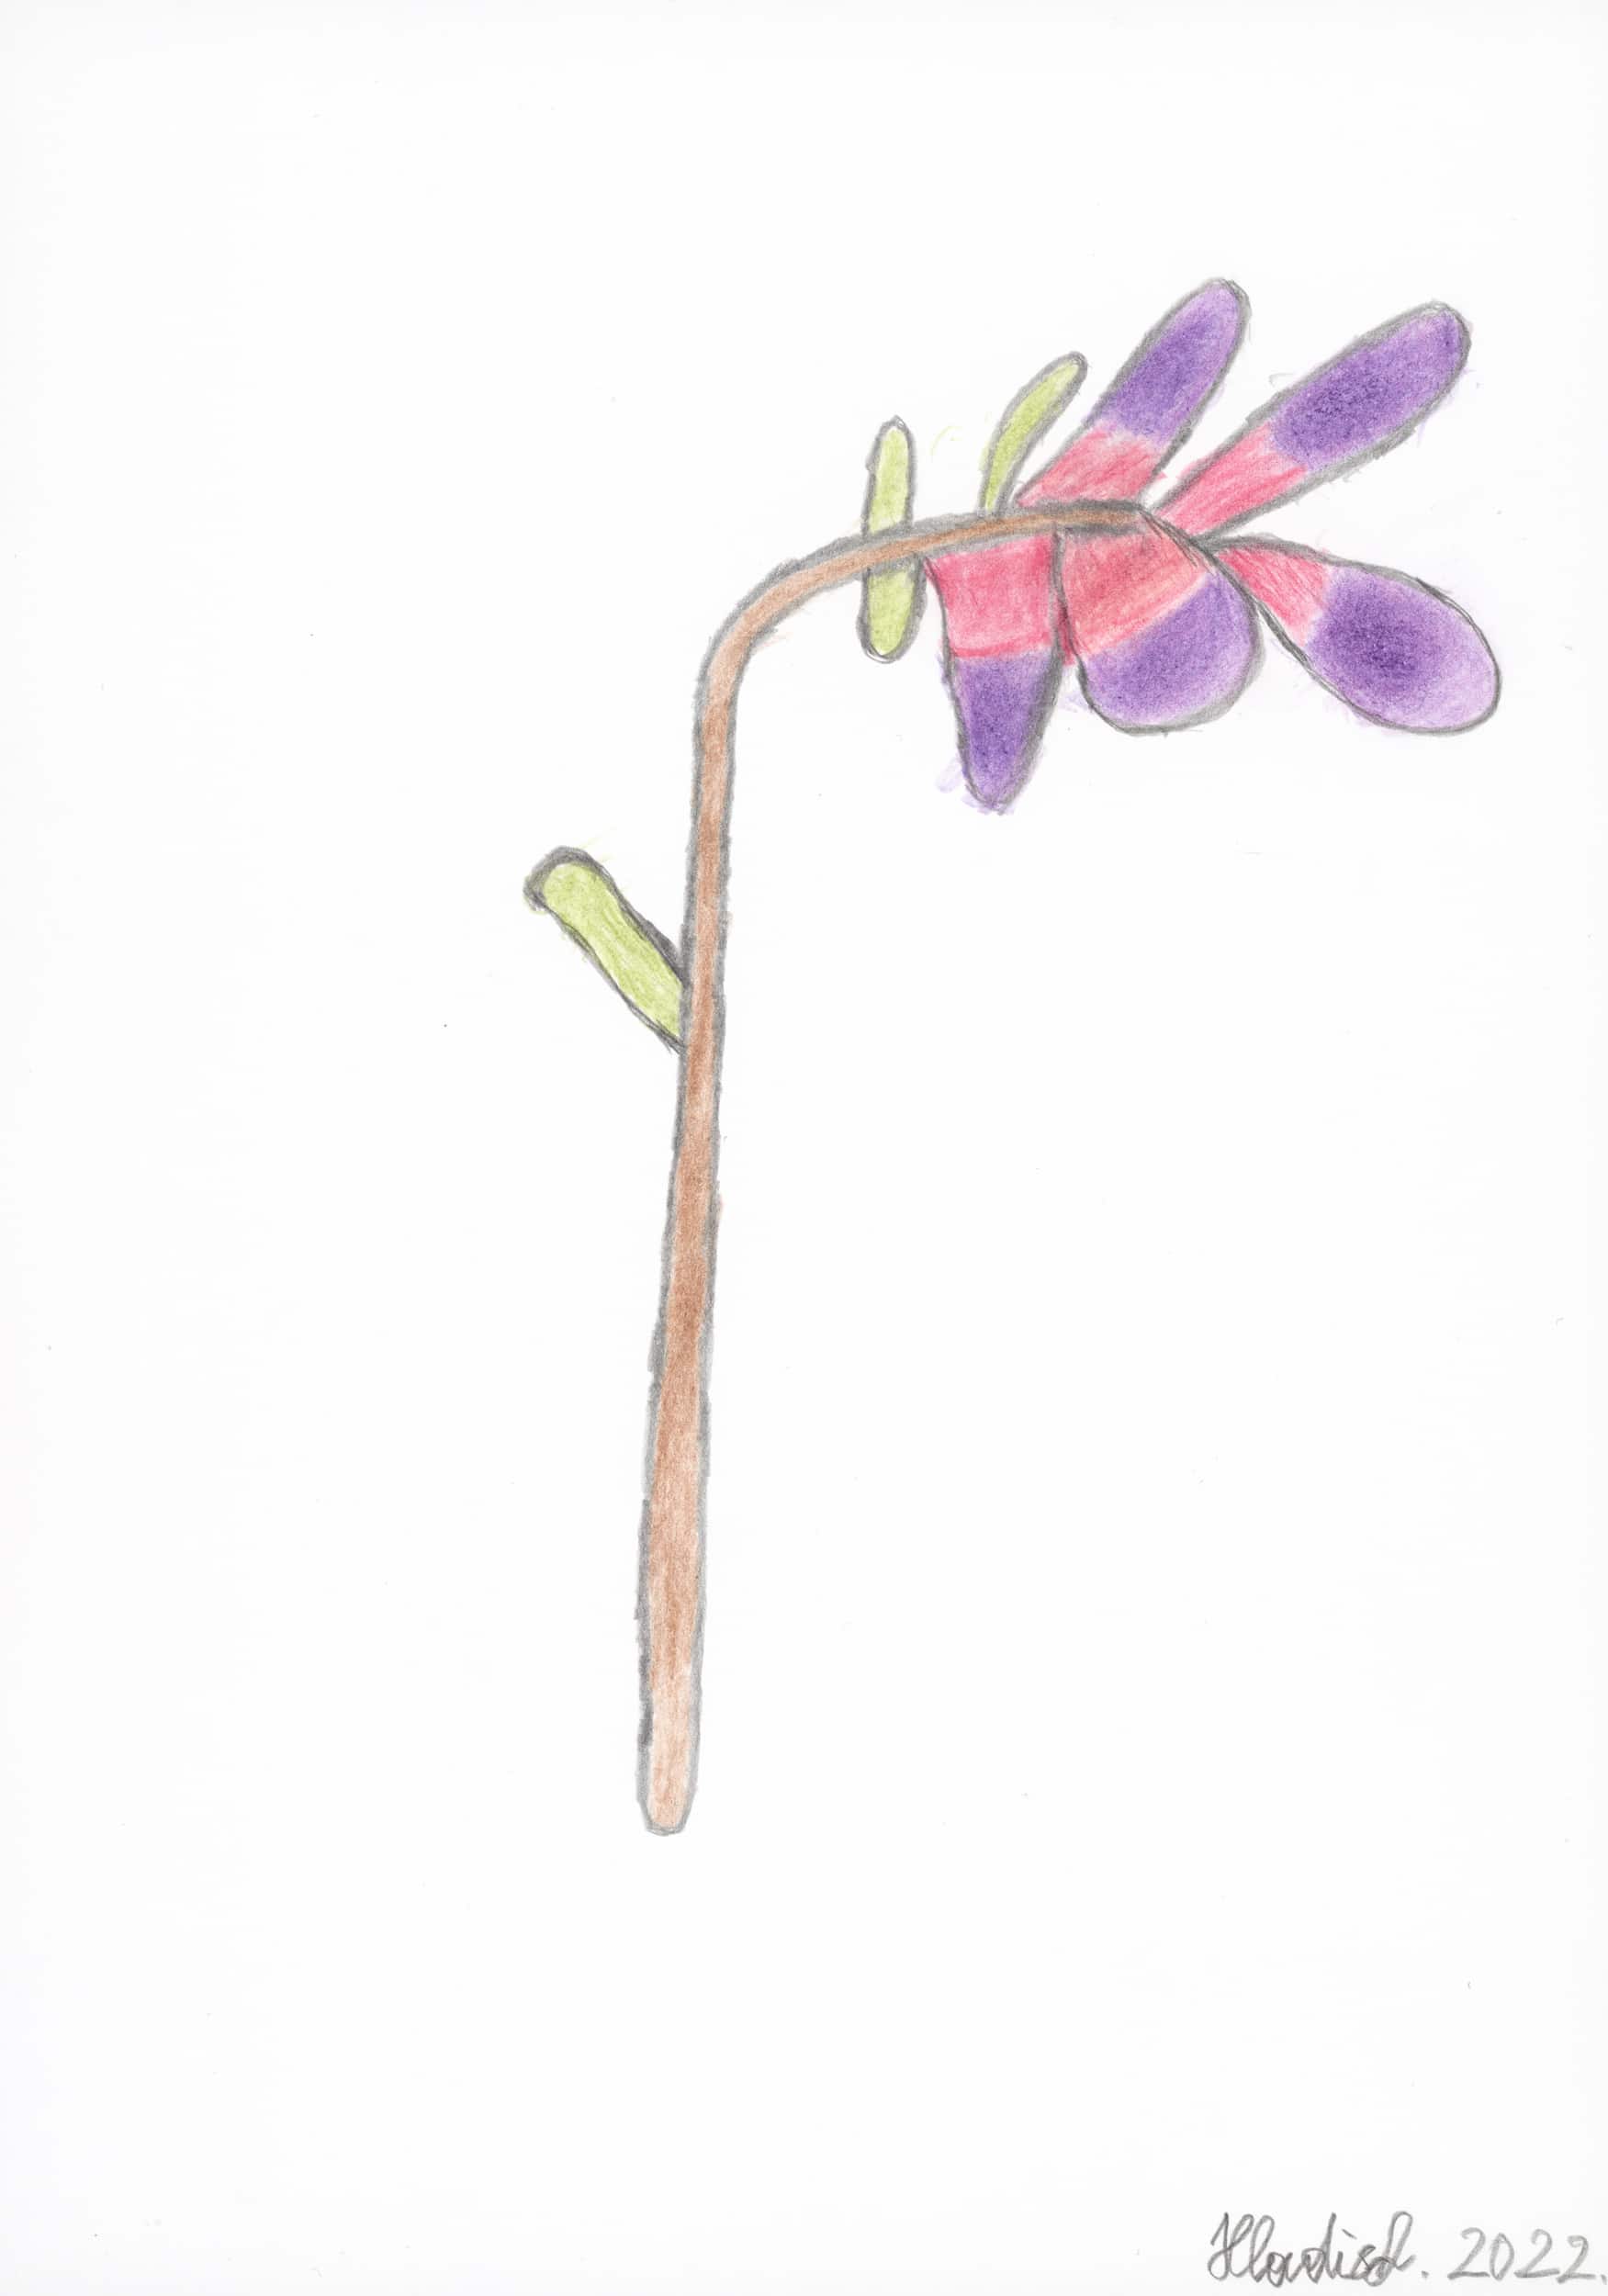 hladisch helmut - Magnolienblume / Magnolia flower_2022